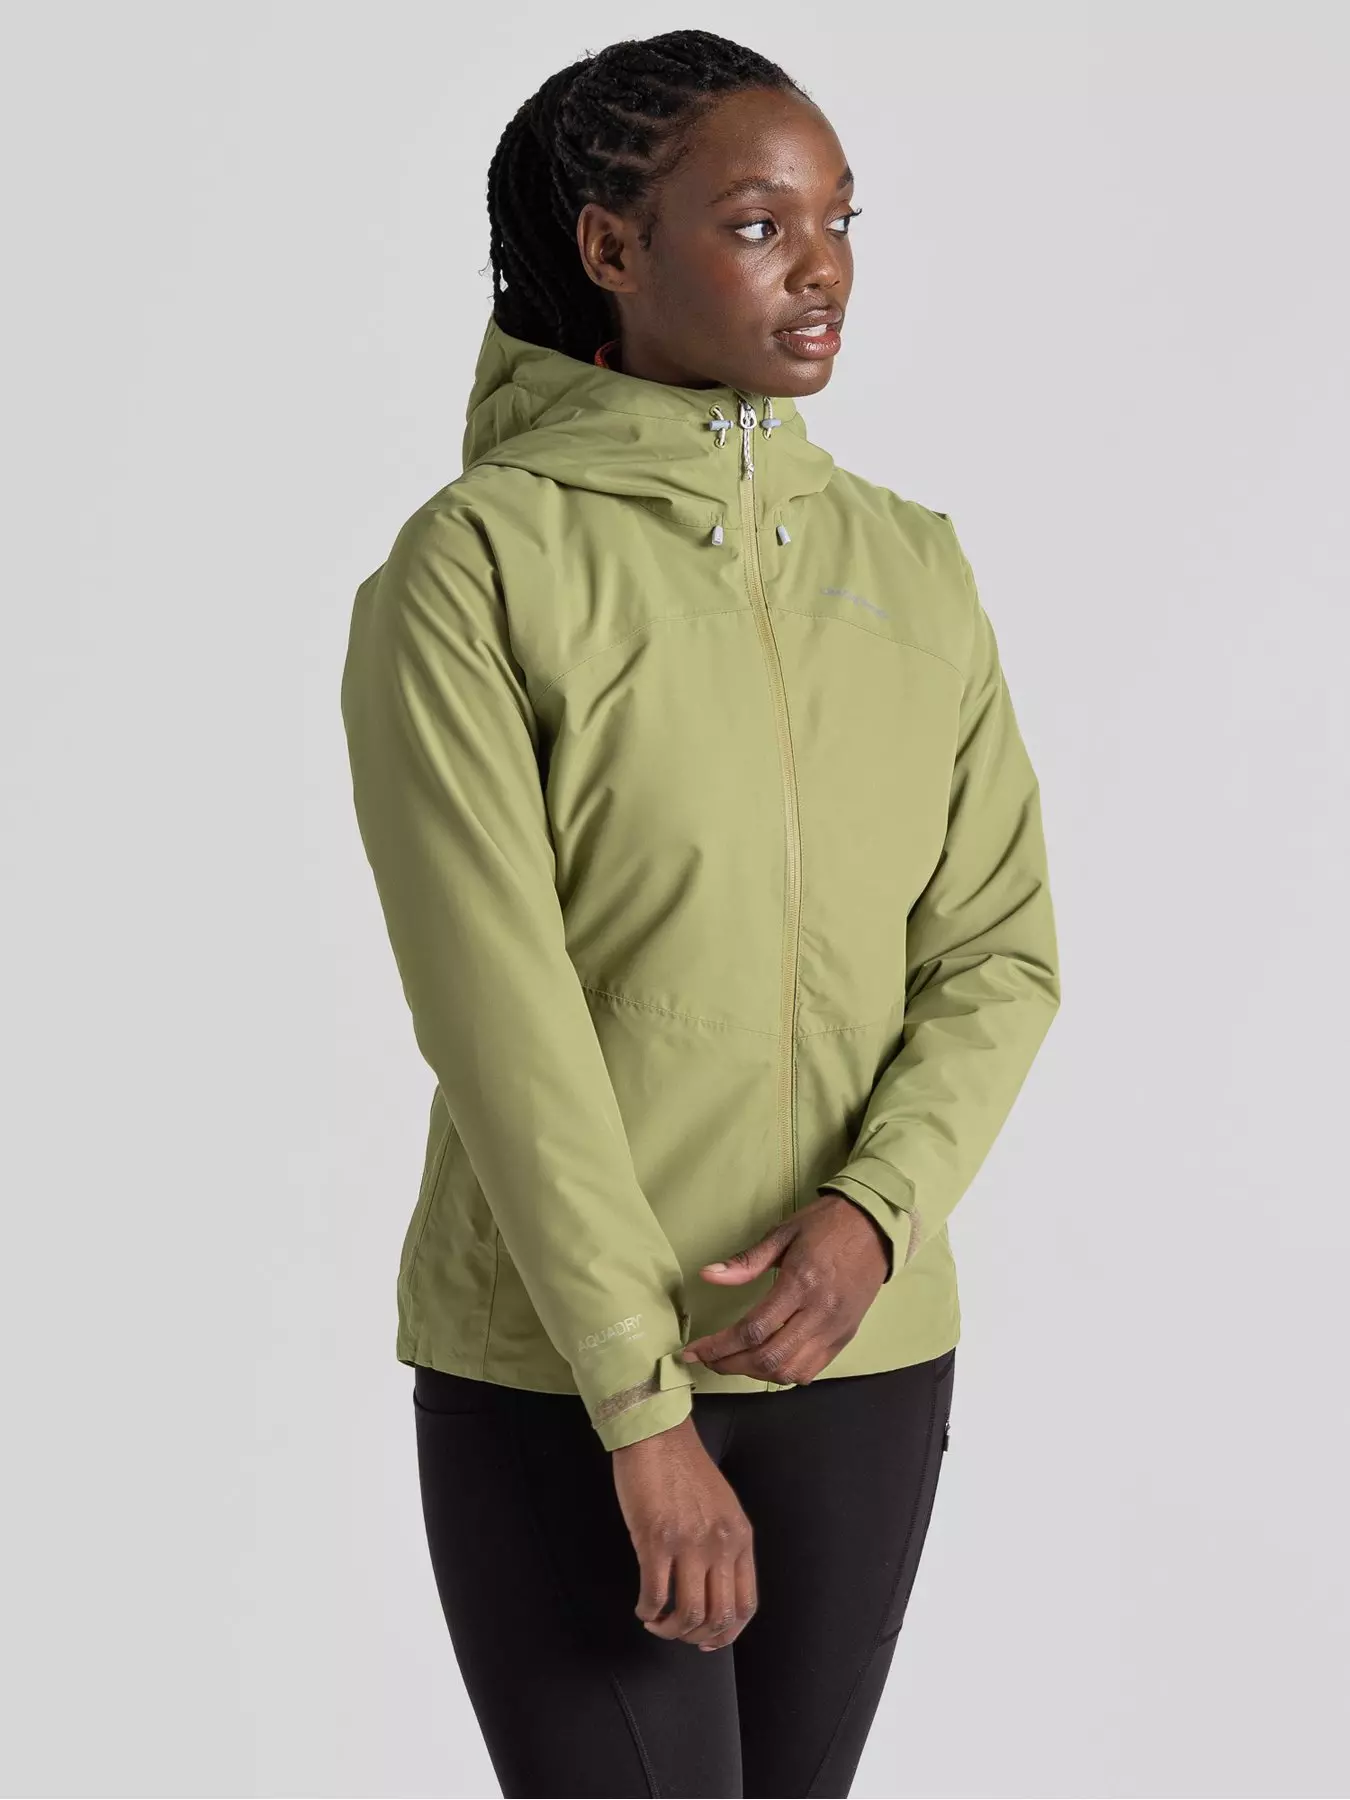 Regatta Giovanna Fletcher - Lellani Jackets Waterproof Insulated Jacket -  Dark Green